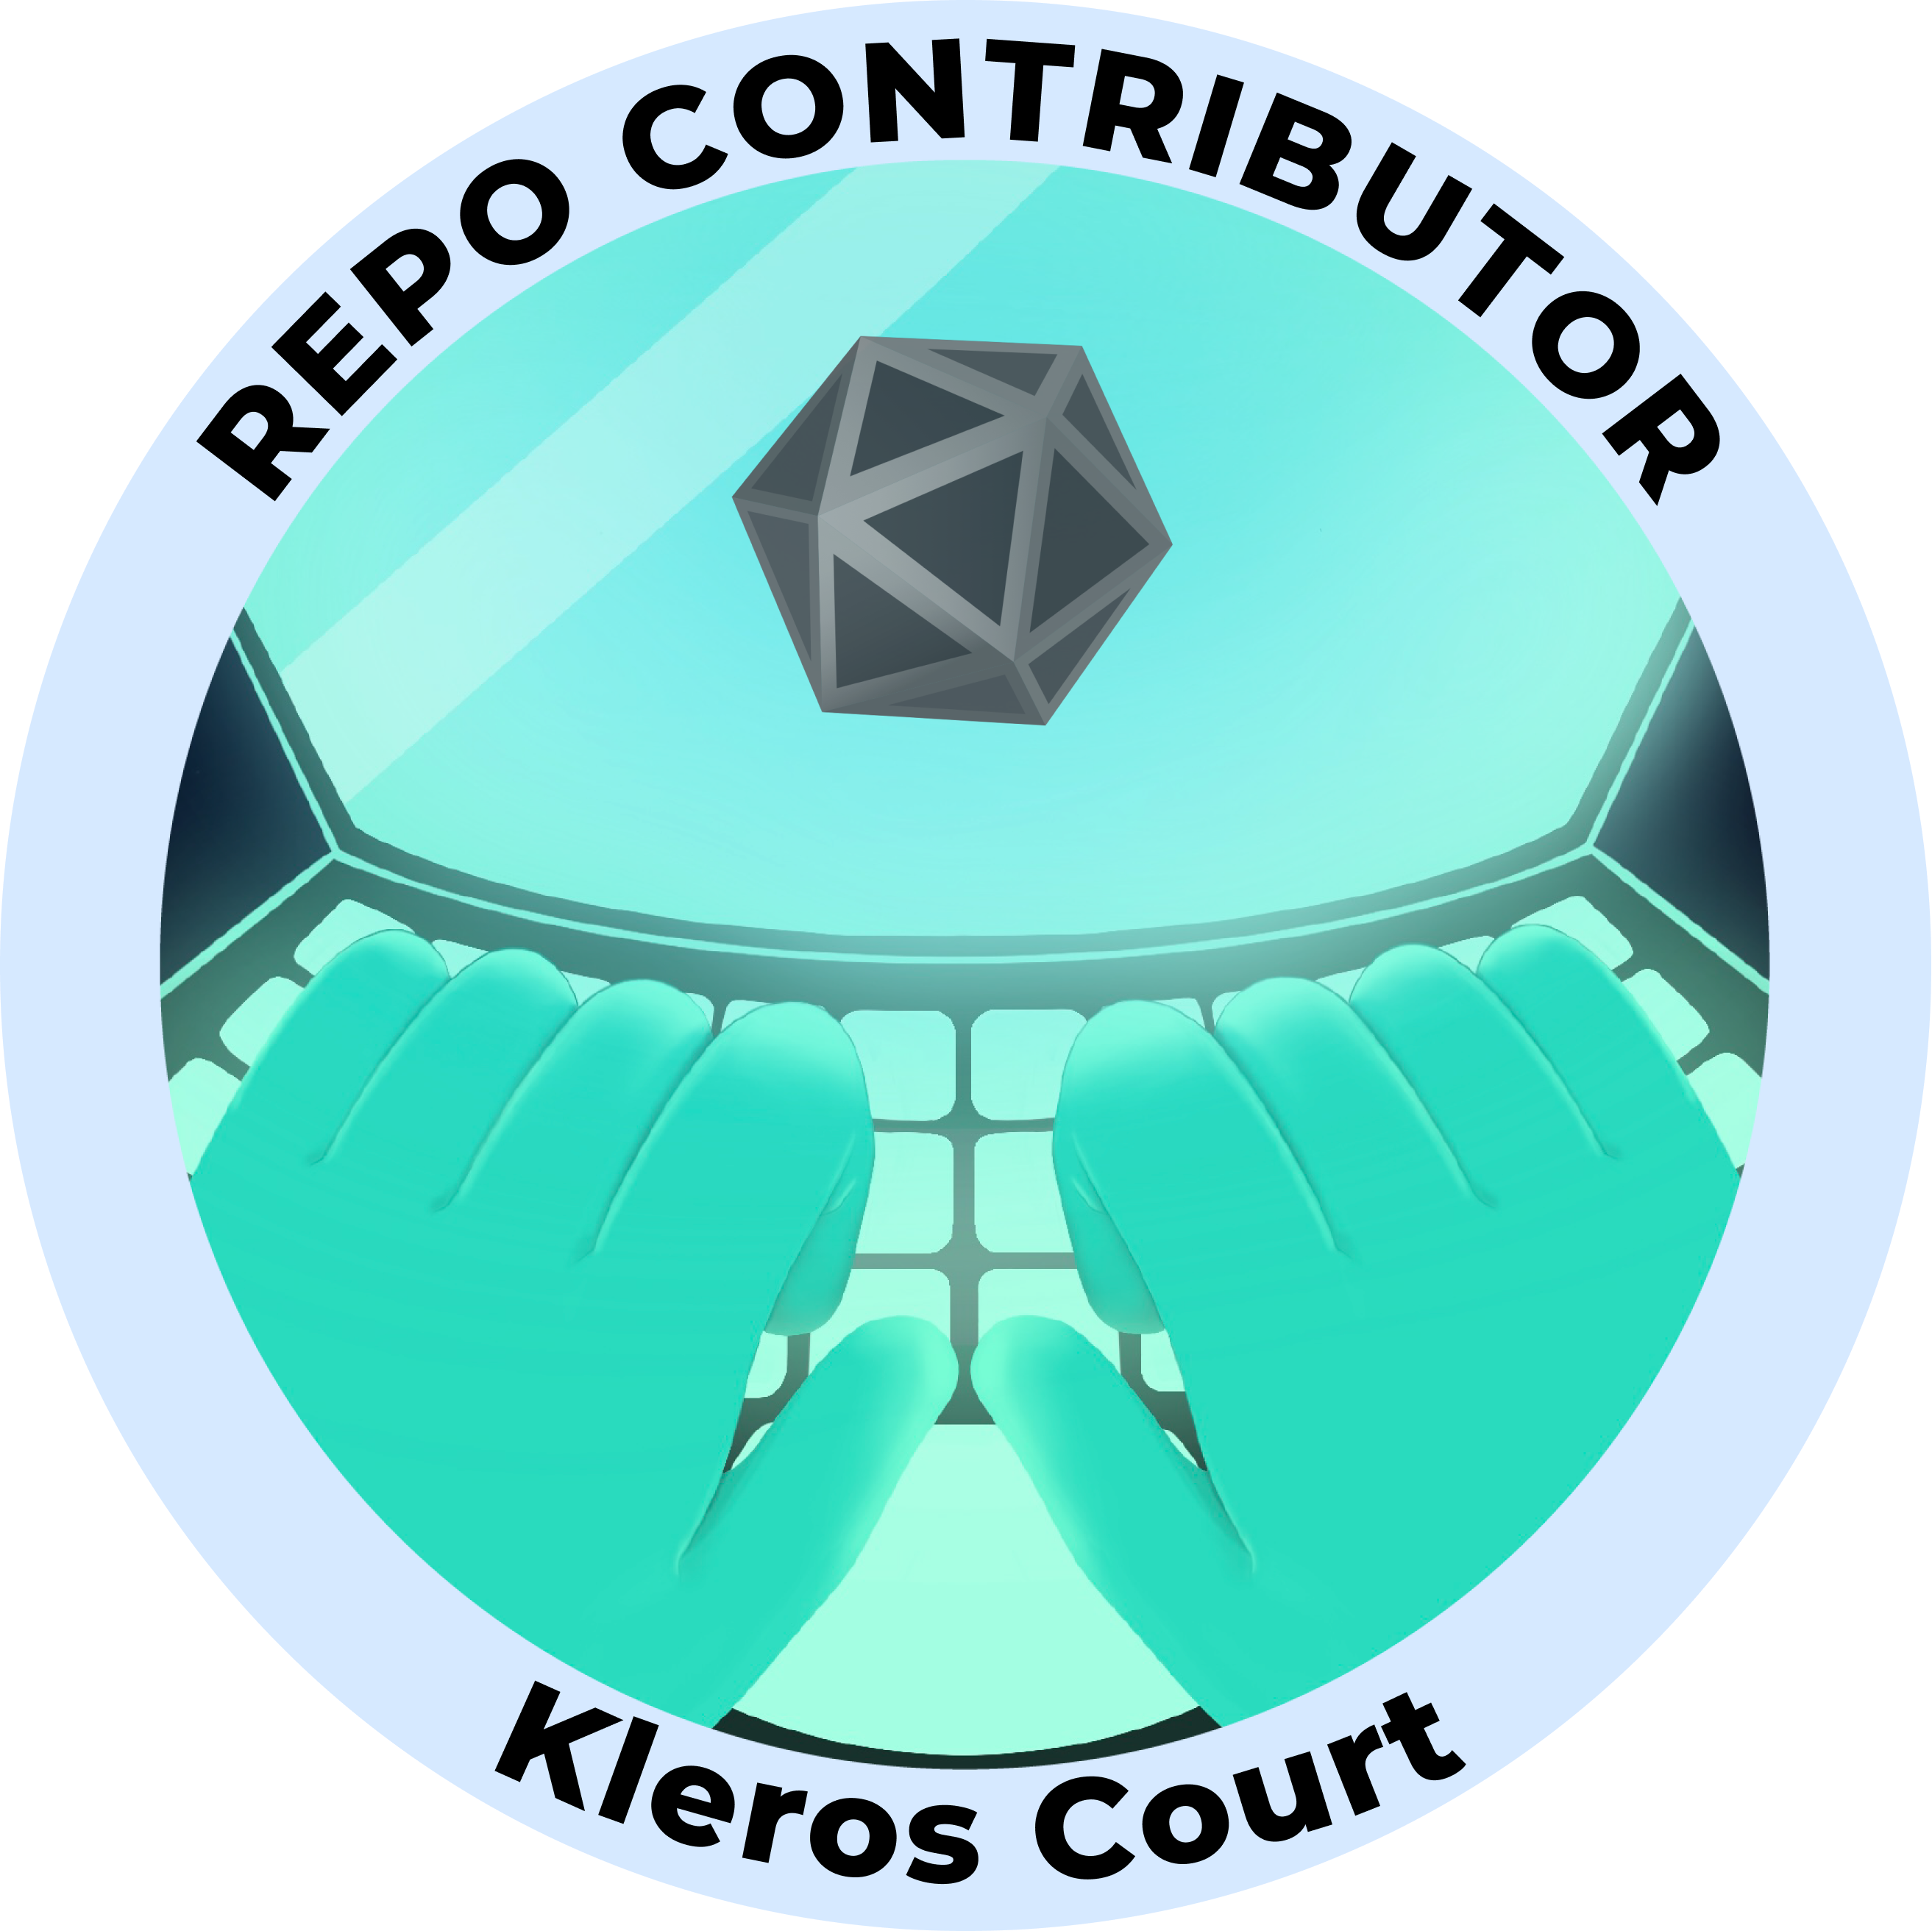 Web3 Badge | Project Contributor: Kleros Court